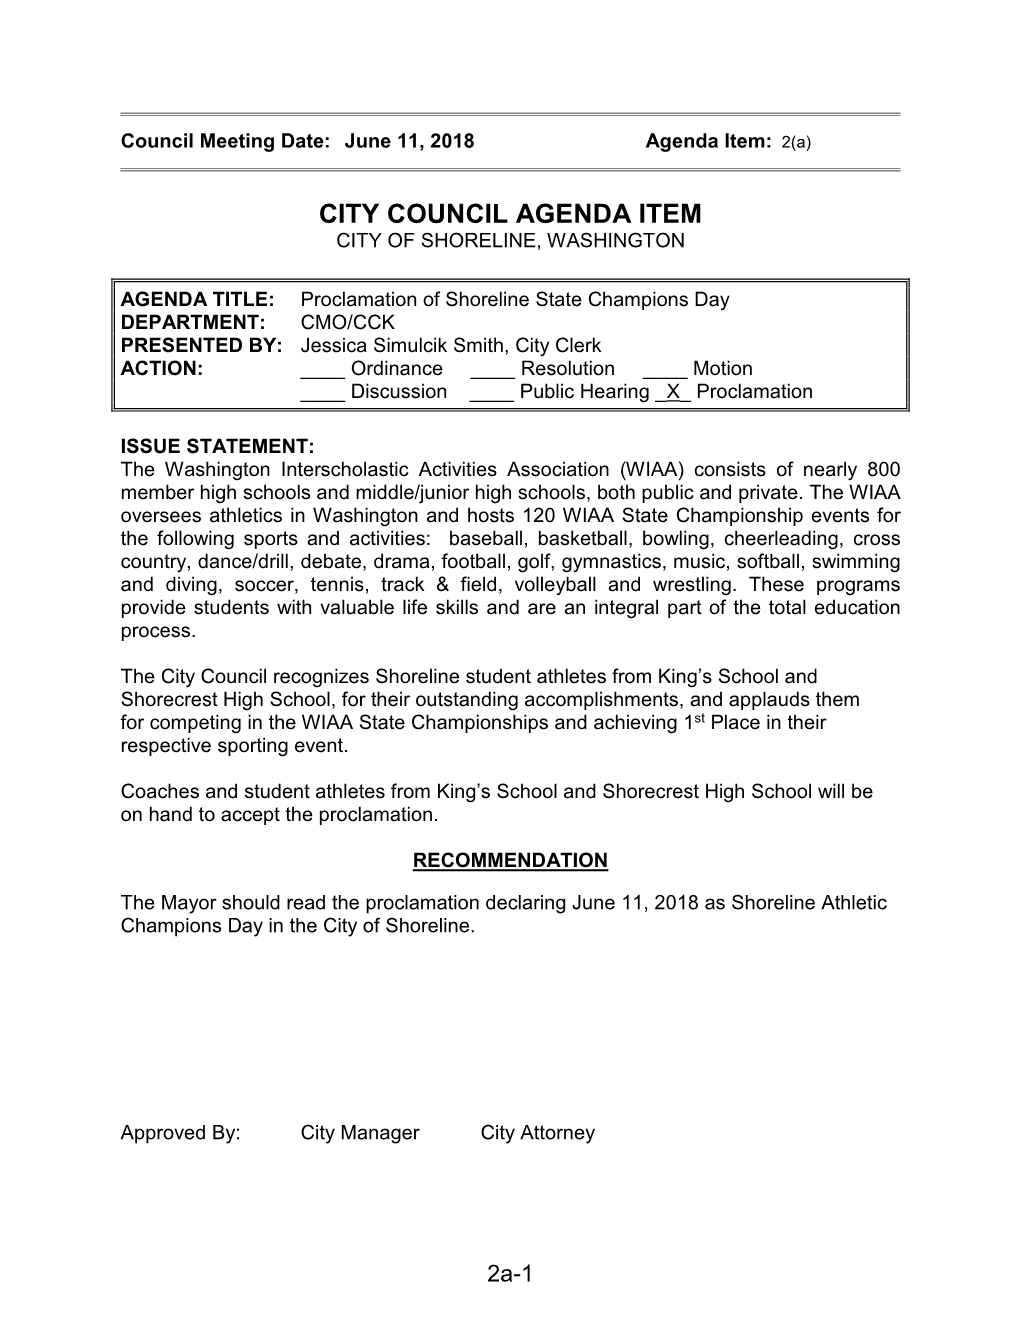 City Council Agenda Item City of Shoreline, Washington